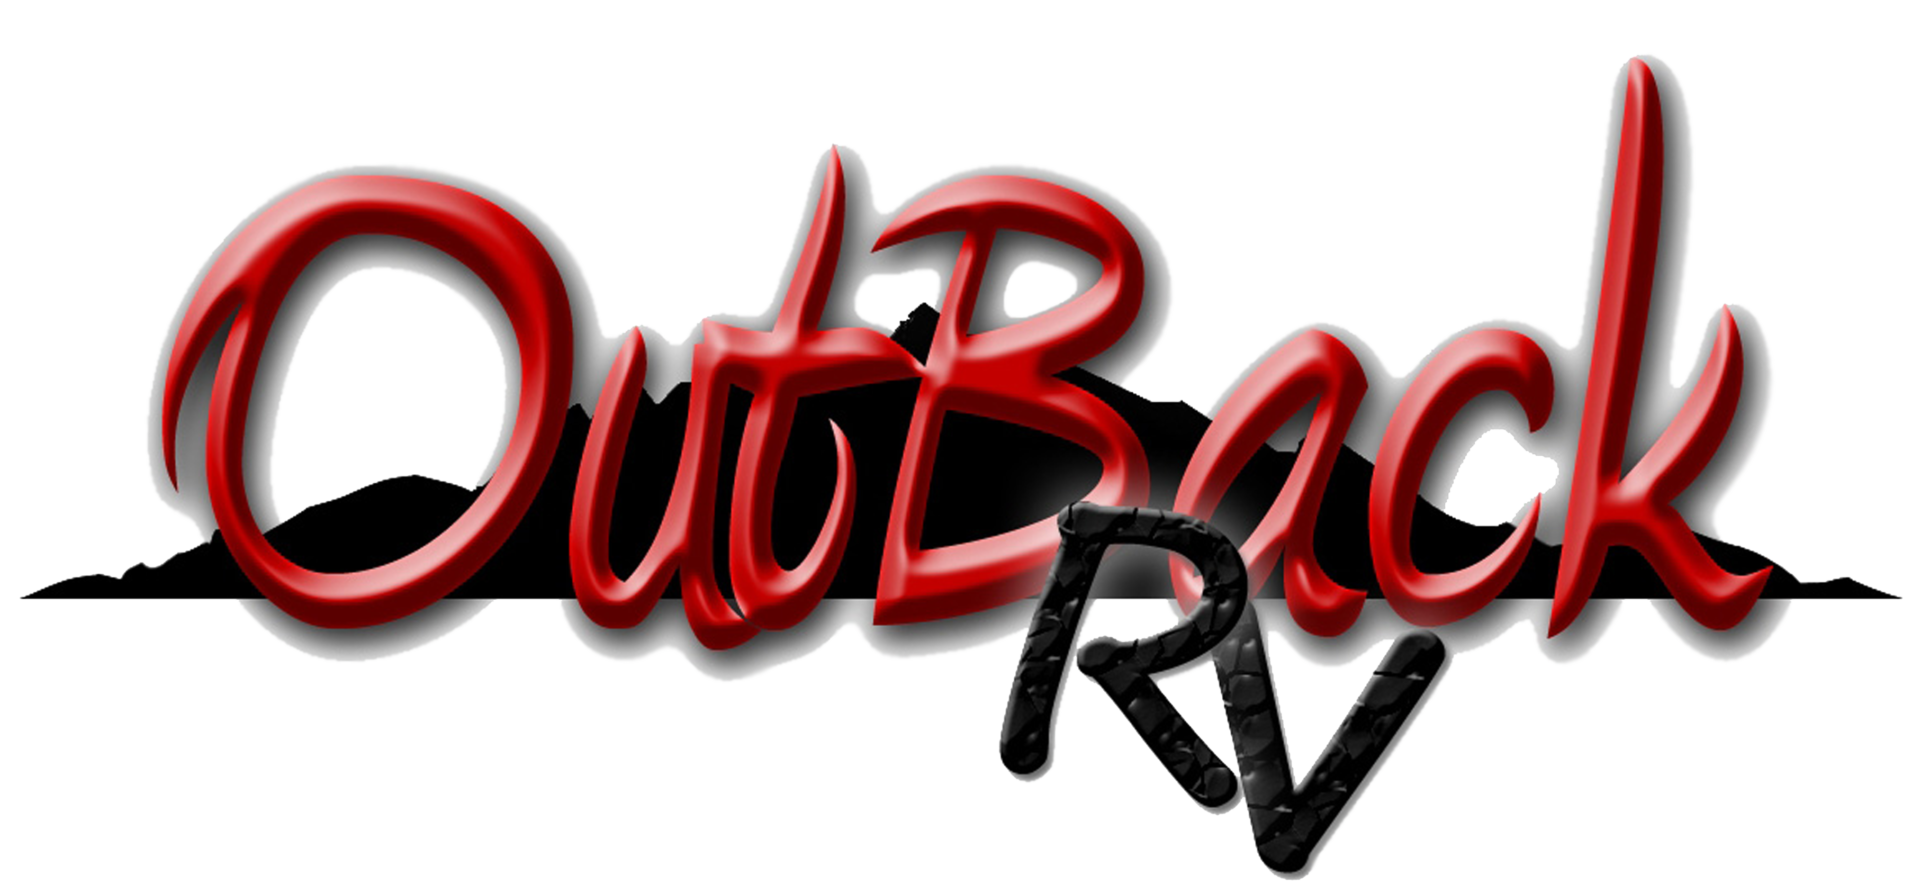 Outback Logo